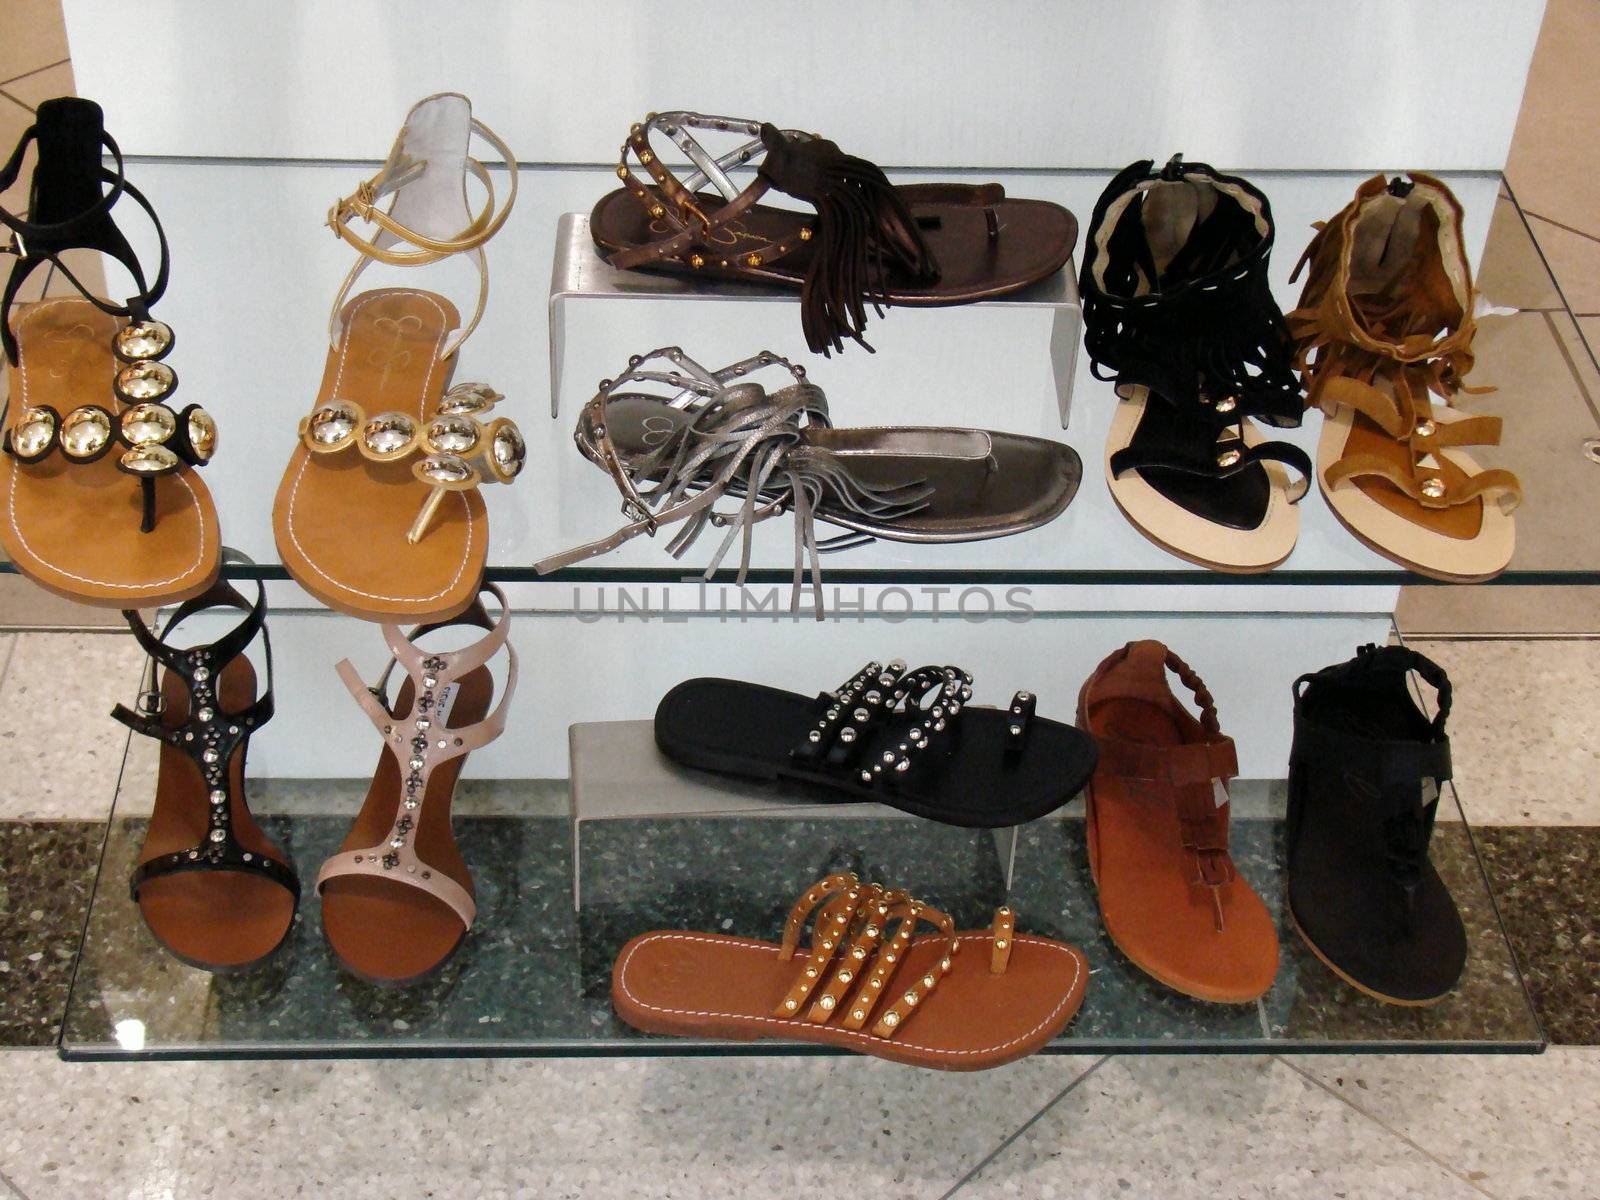 summer shoe display in shoe store window